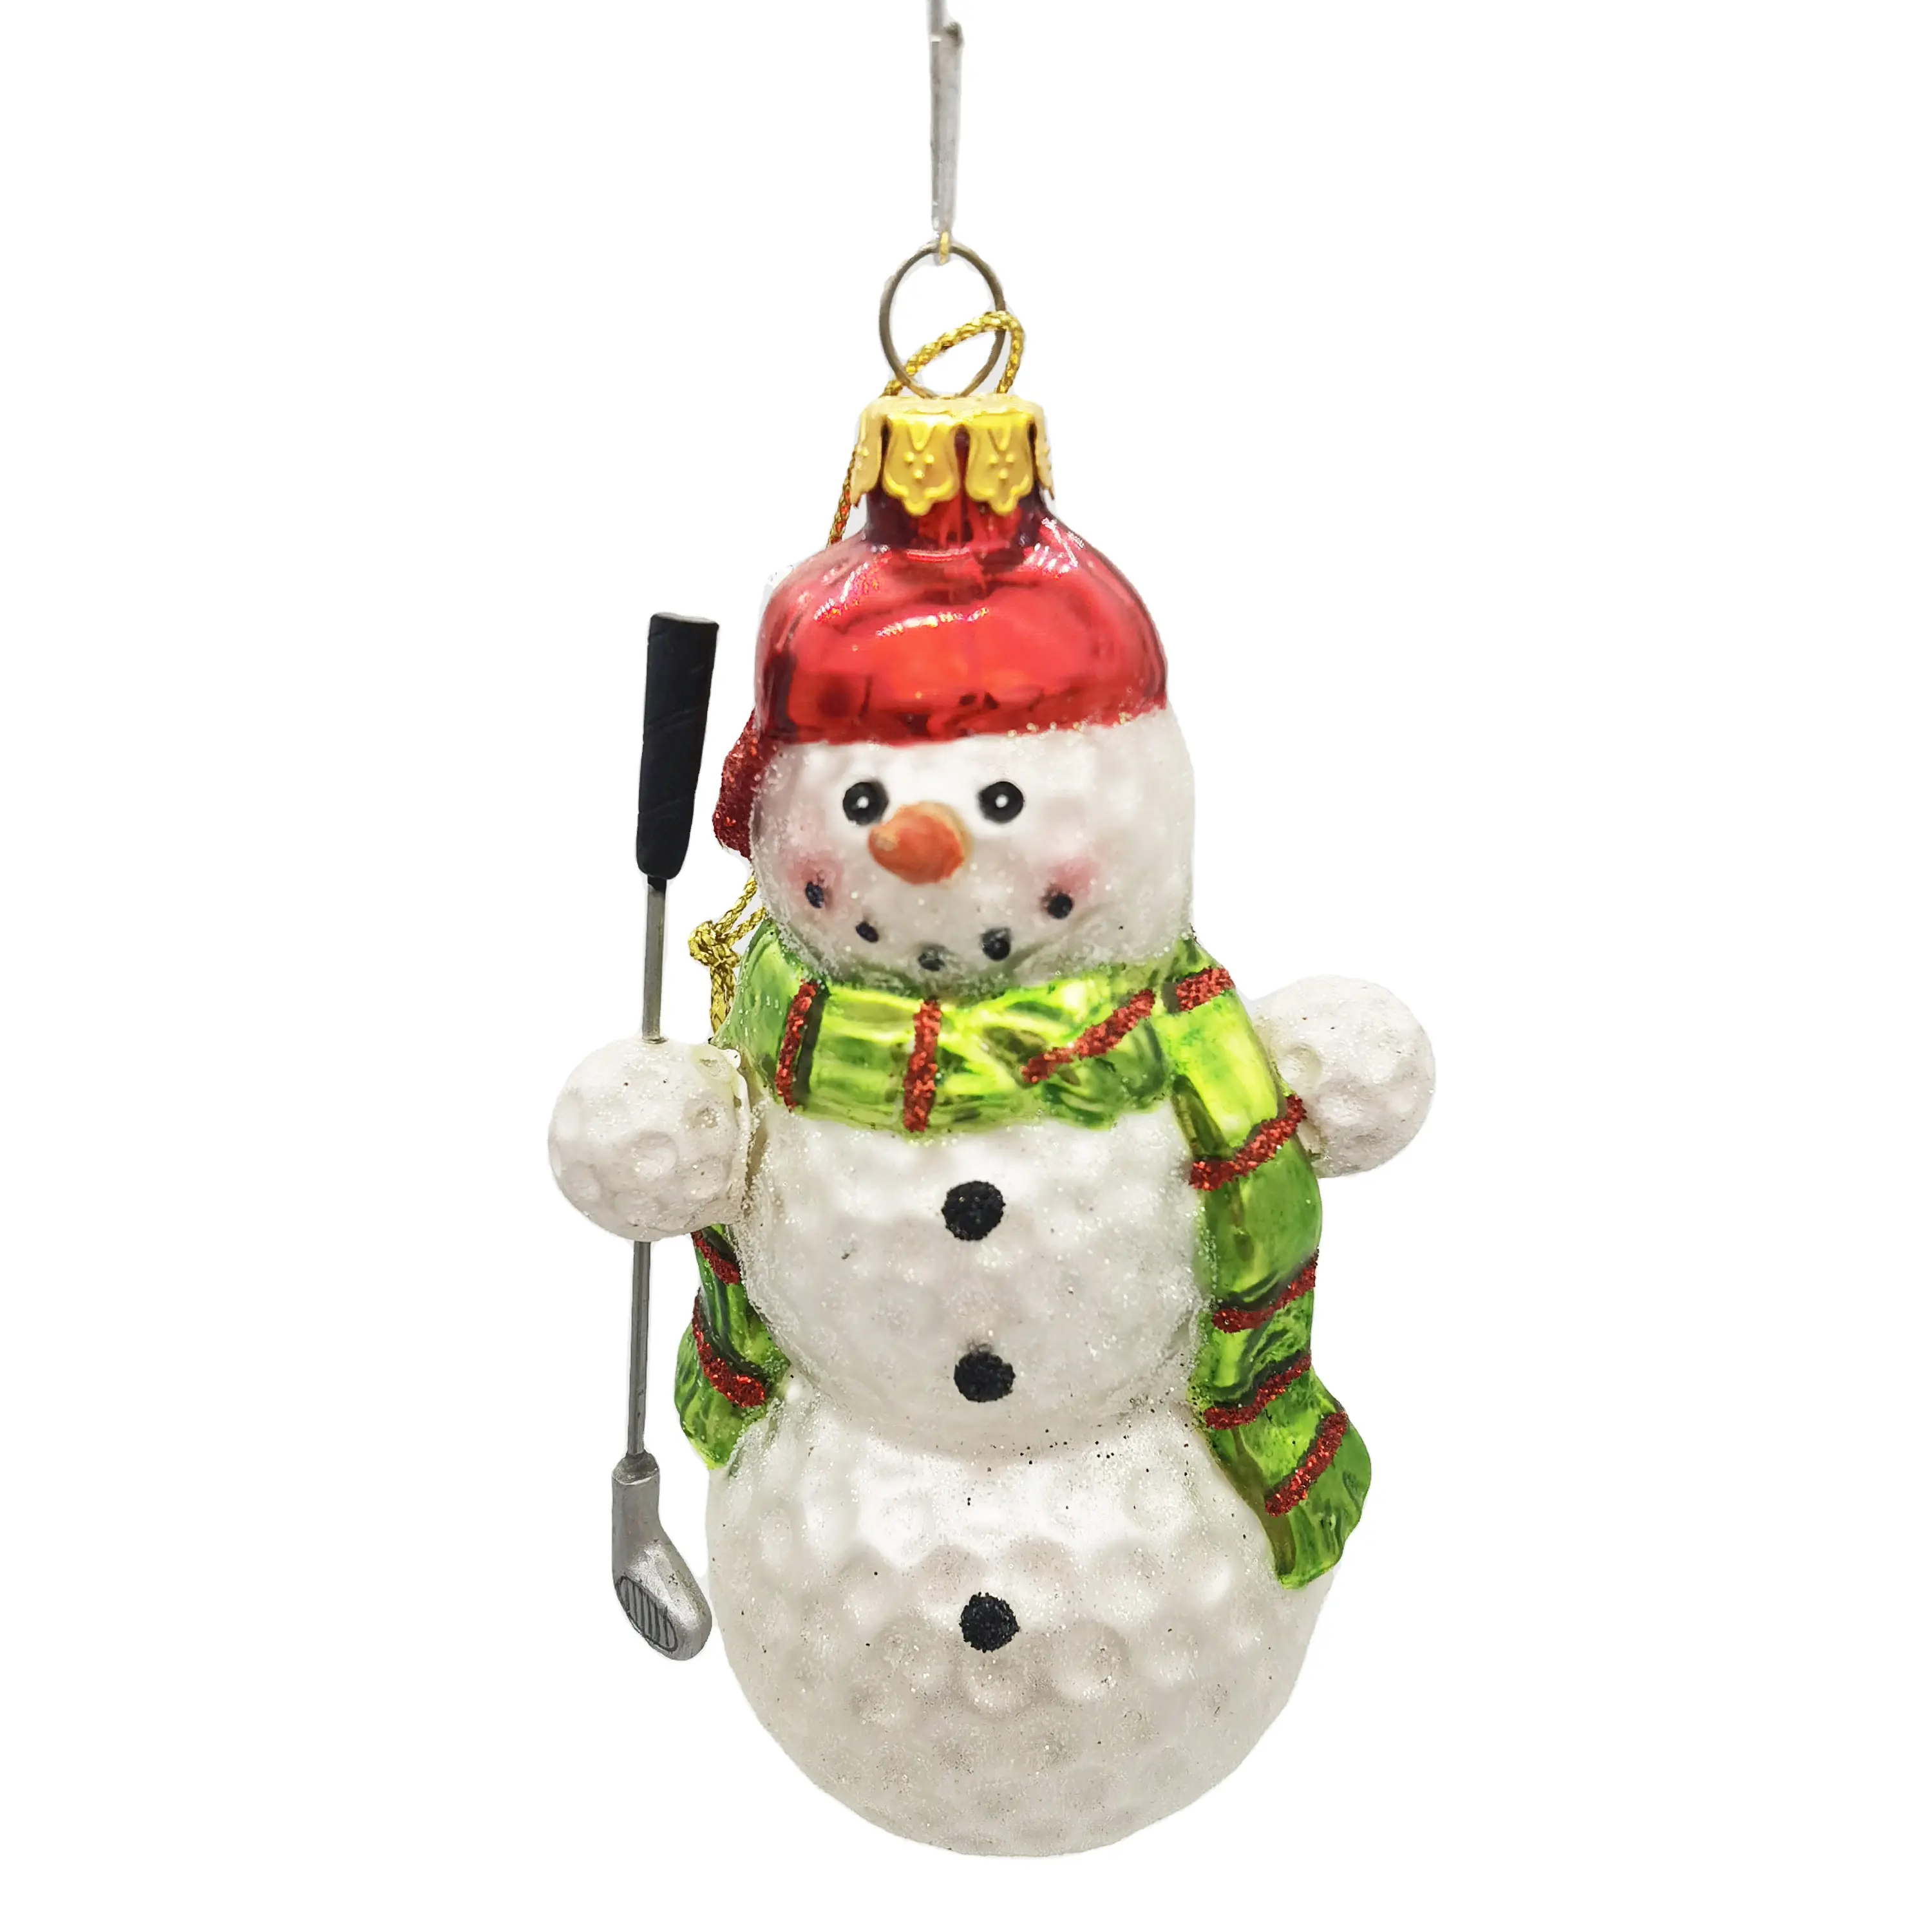 Mini Ornament Christmas Snowman White Glass Decorative Christmas Tree Bauble Cute Snowman With Golf Clubs